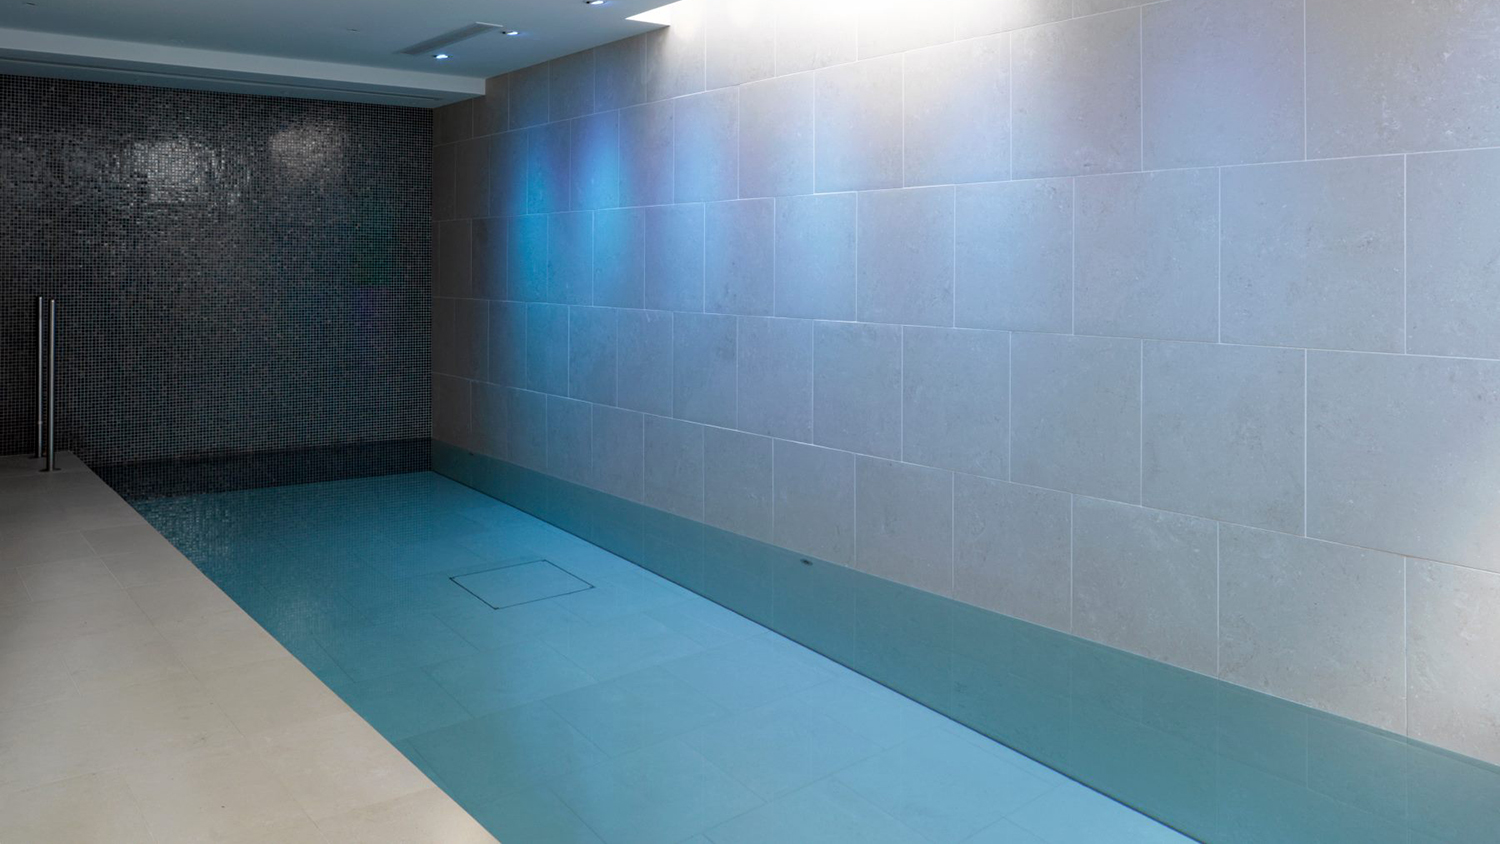 hydro floors raise and lower to make hidden swimming pools hydrofloors 0010